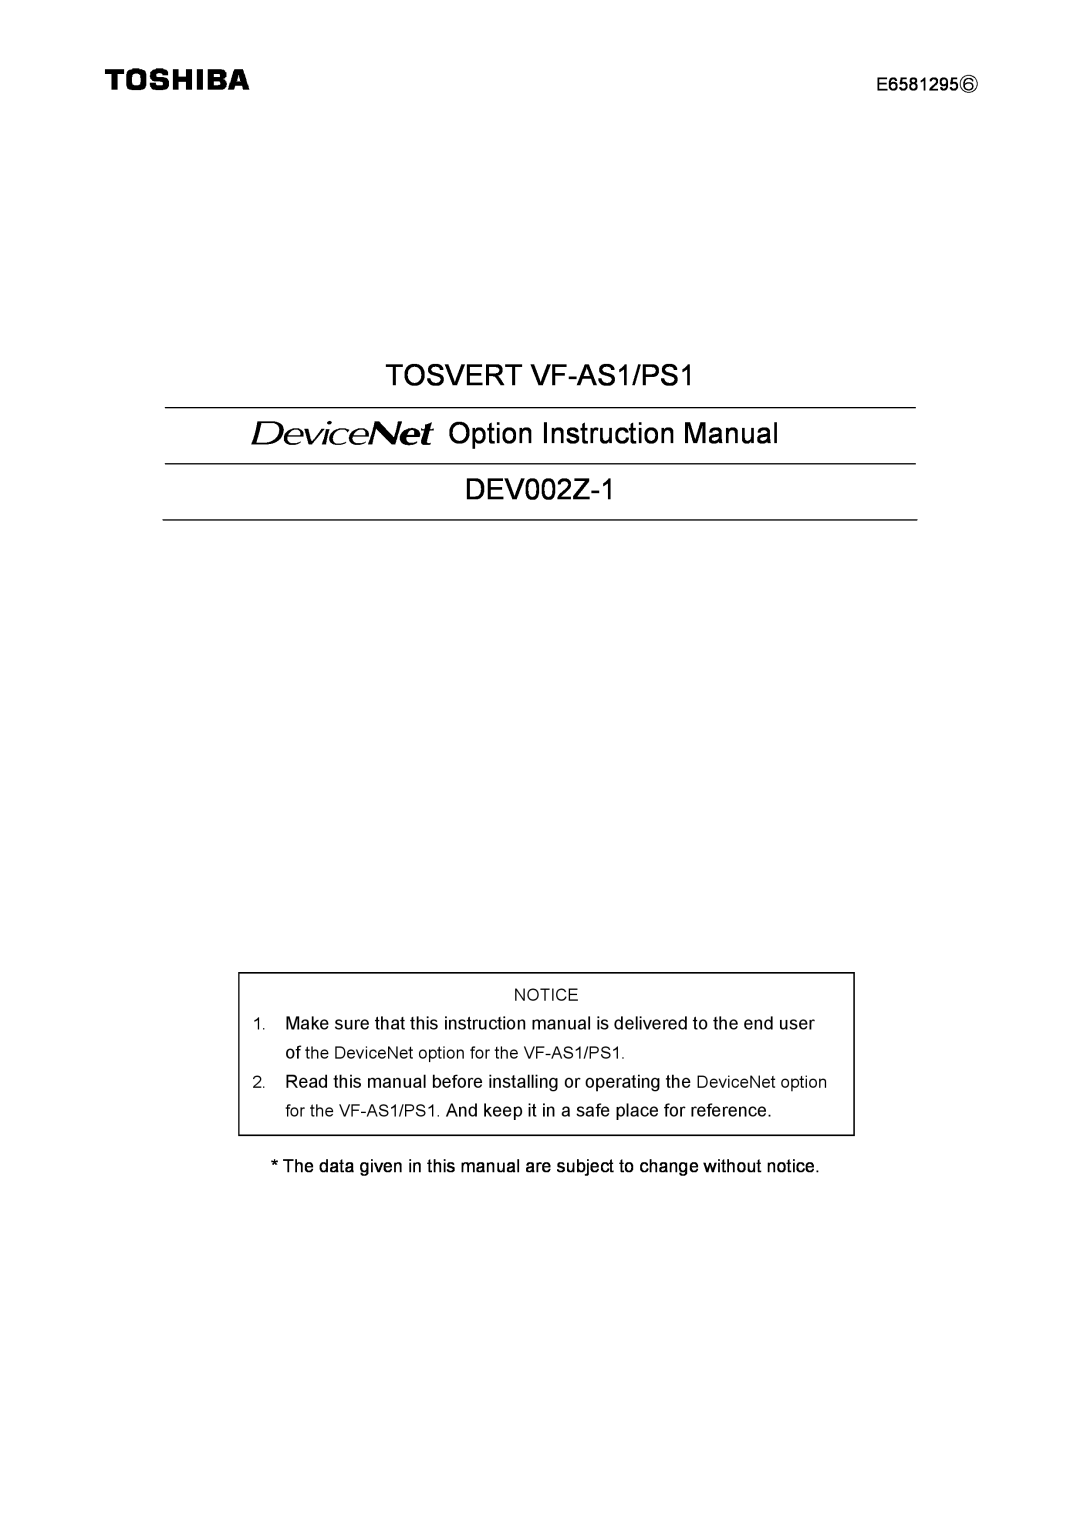 Toshiba instruction manual TOSVERT VF-AS1/PS1 Option Instruction Manual DEV002Z-1 